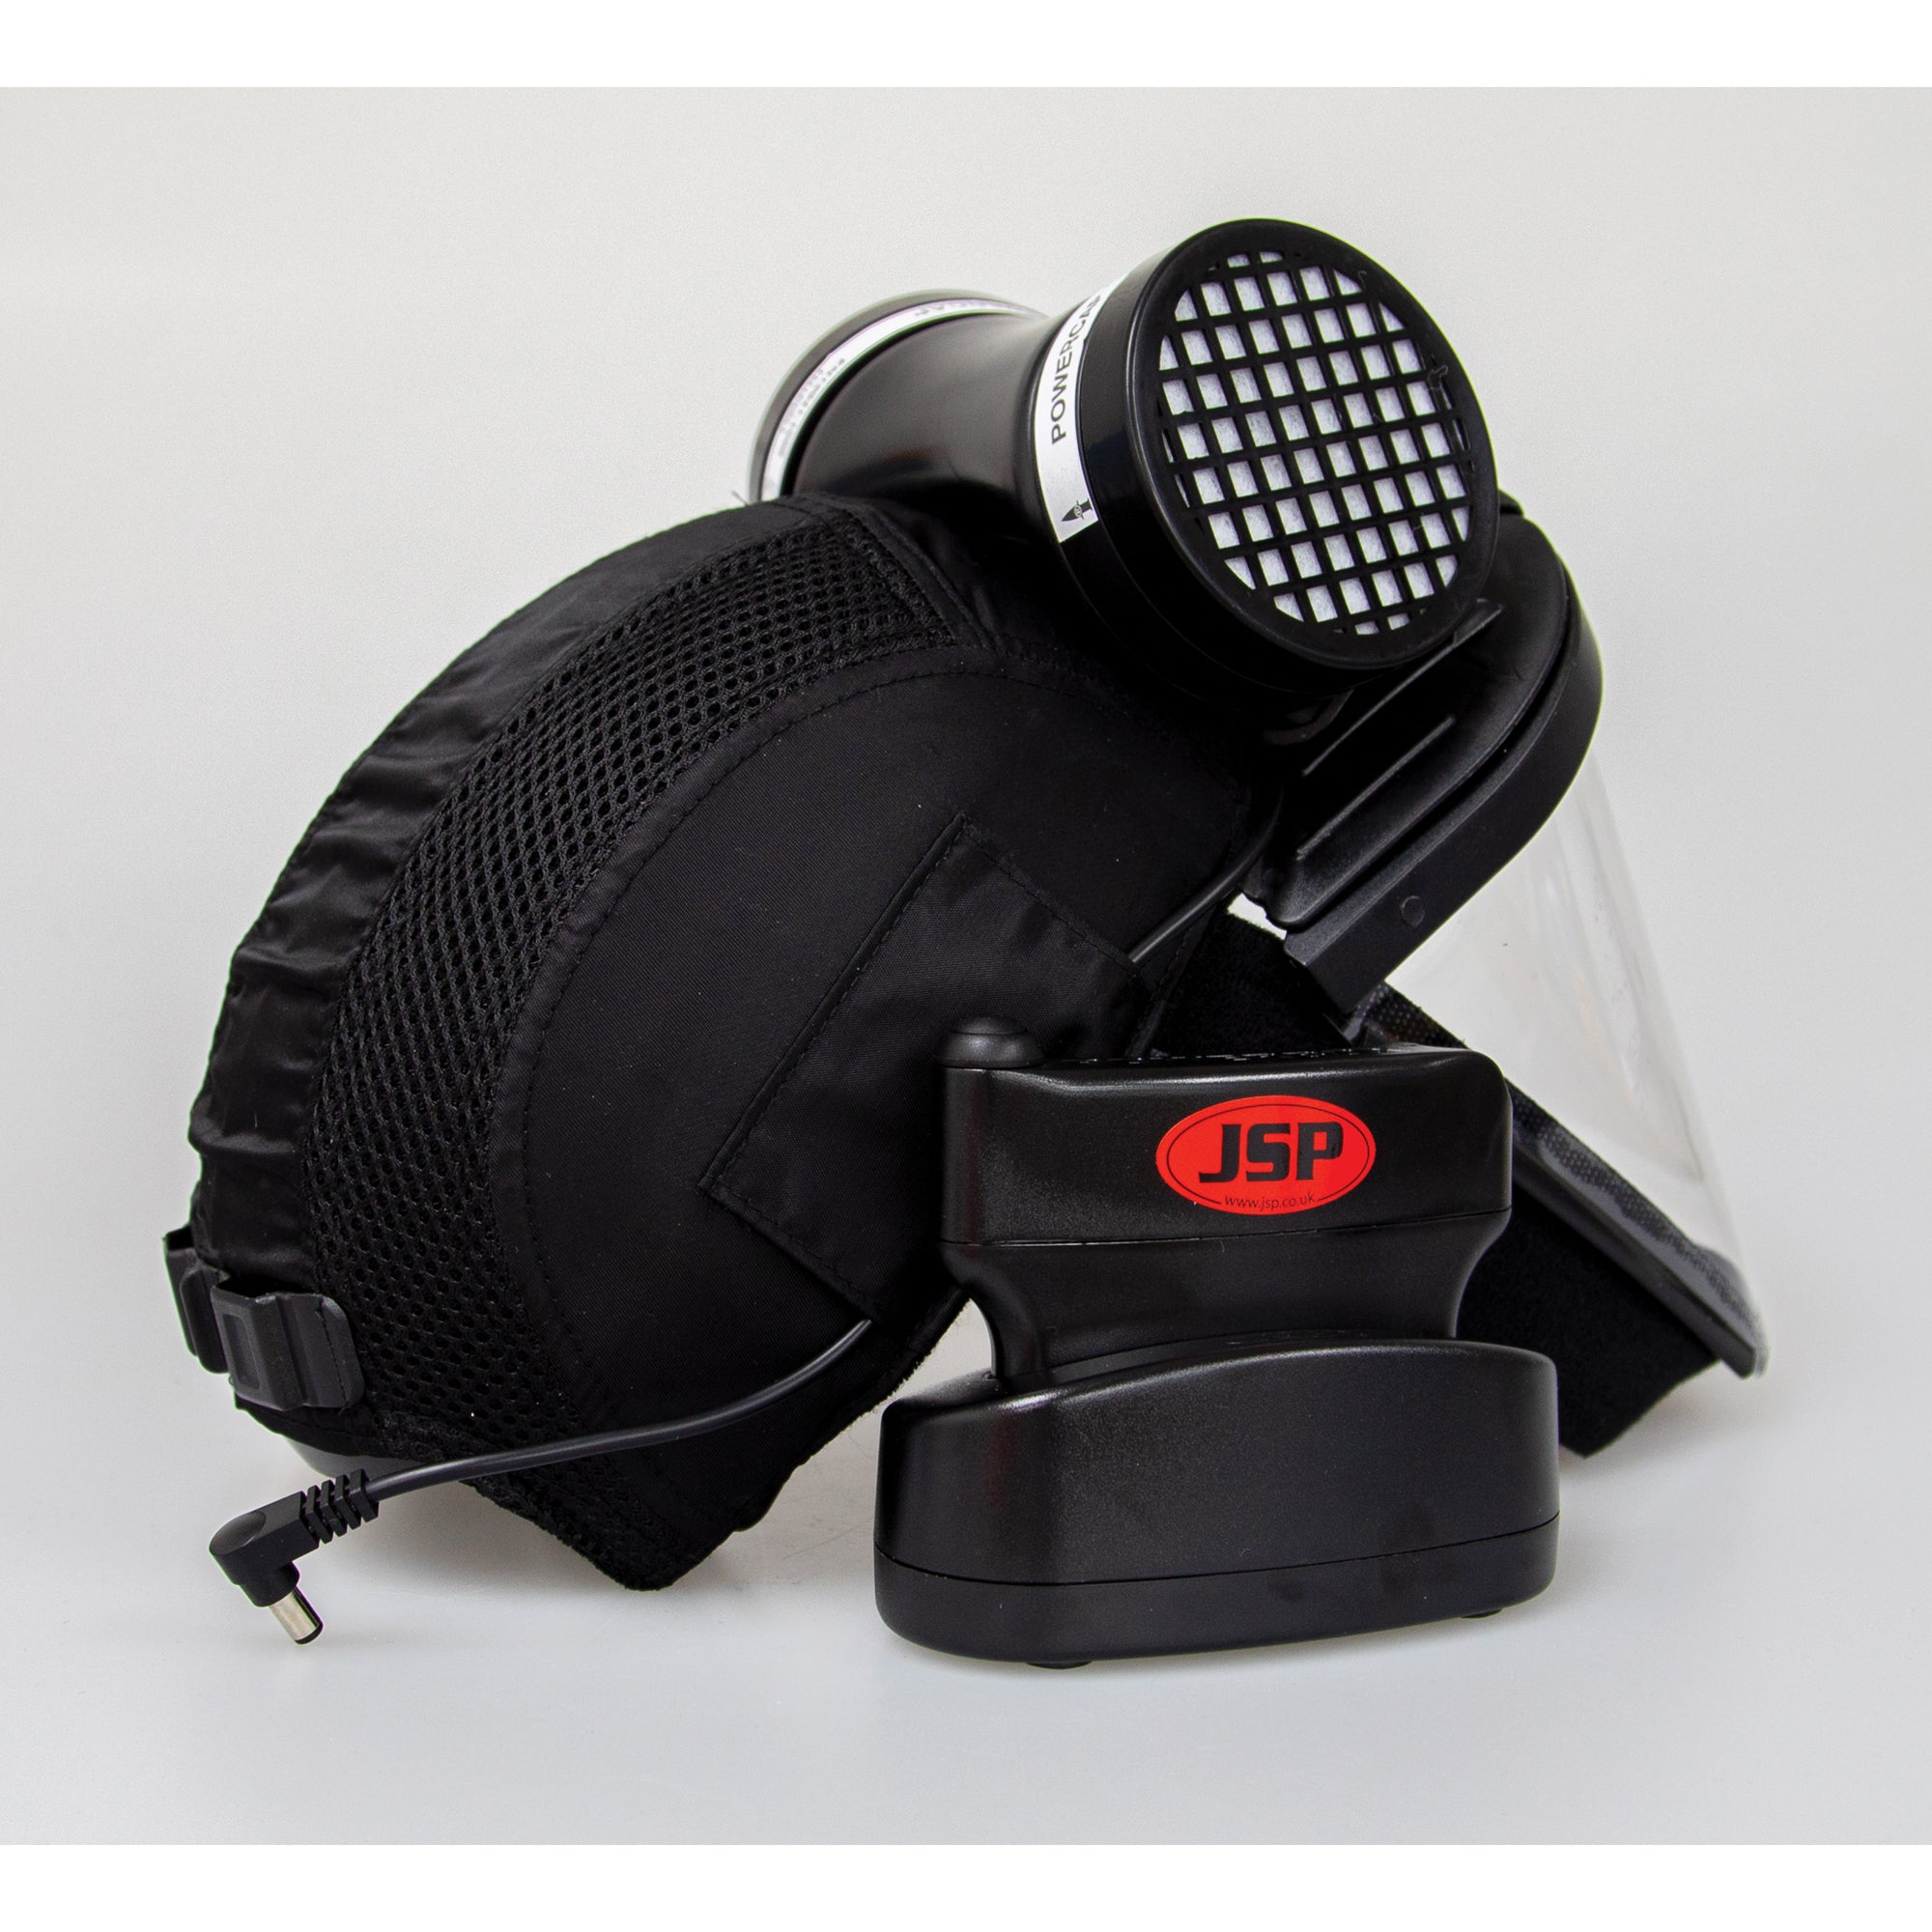 JSP Powercap Active Powered Respirator - TH1P Dust Protection